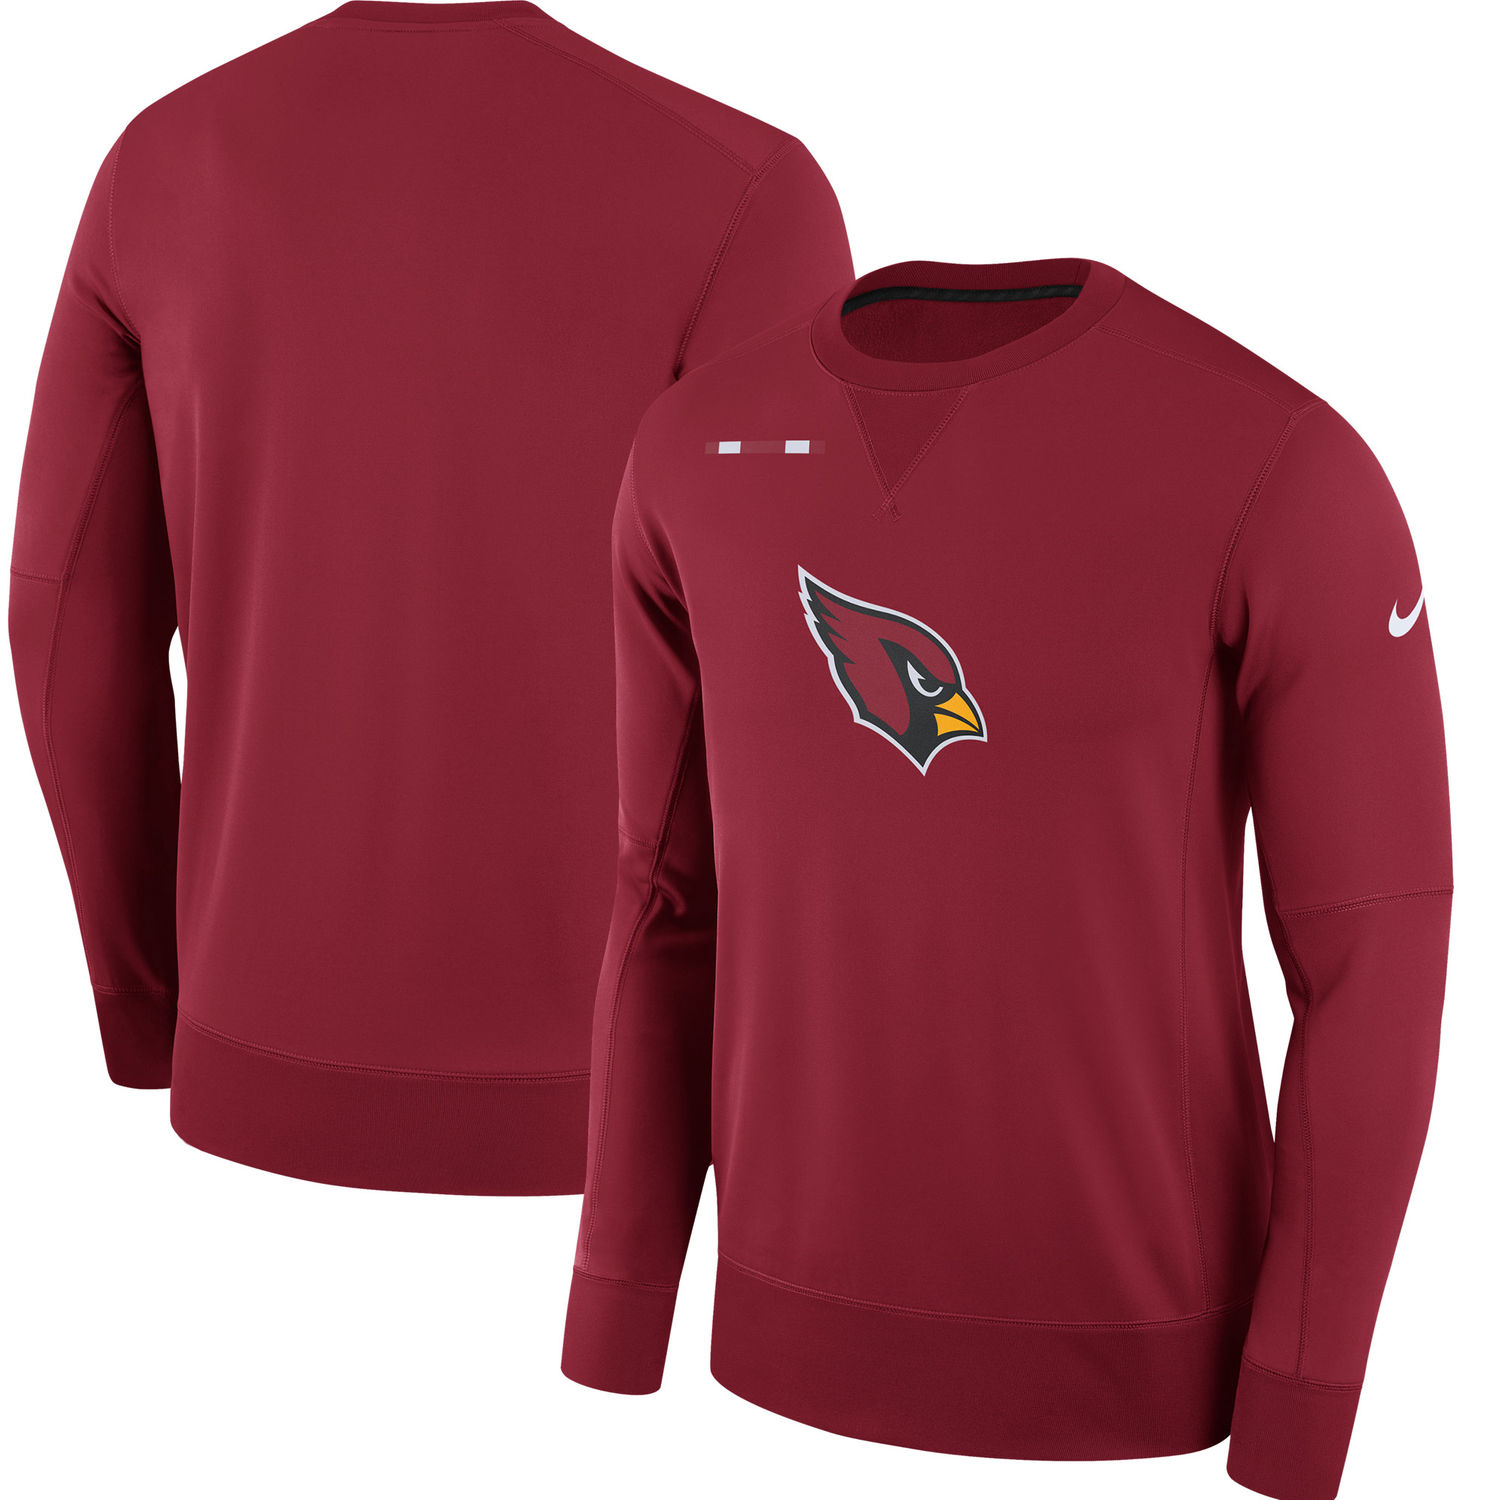 Mens Arizona Cardinals Nike Cardinal Sideline Team Logo Performance Sweatshirt